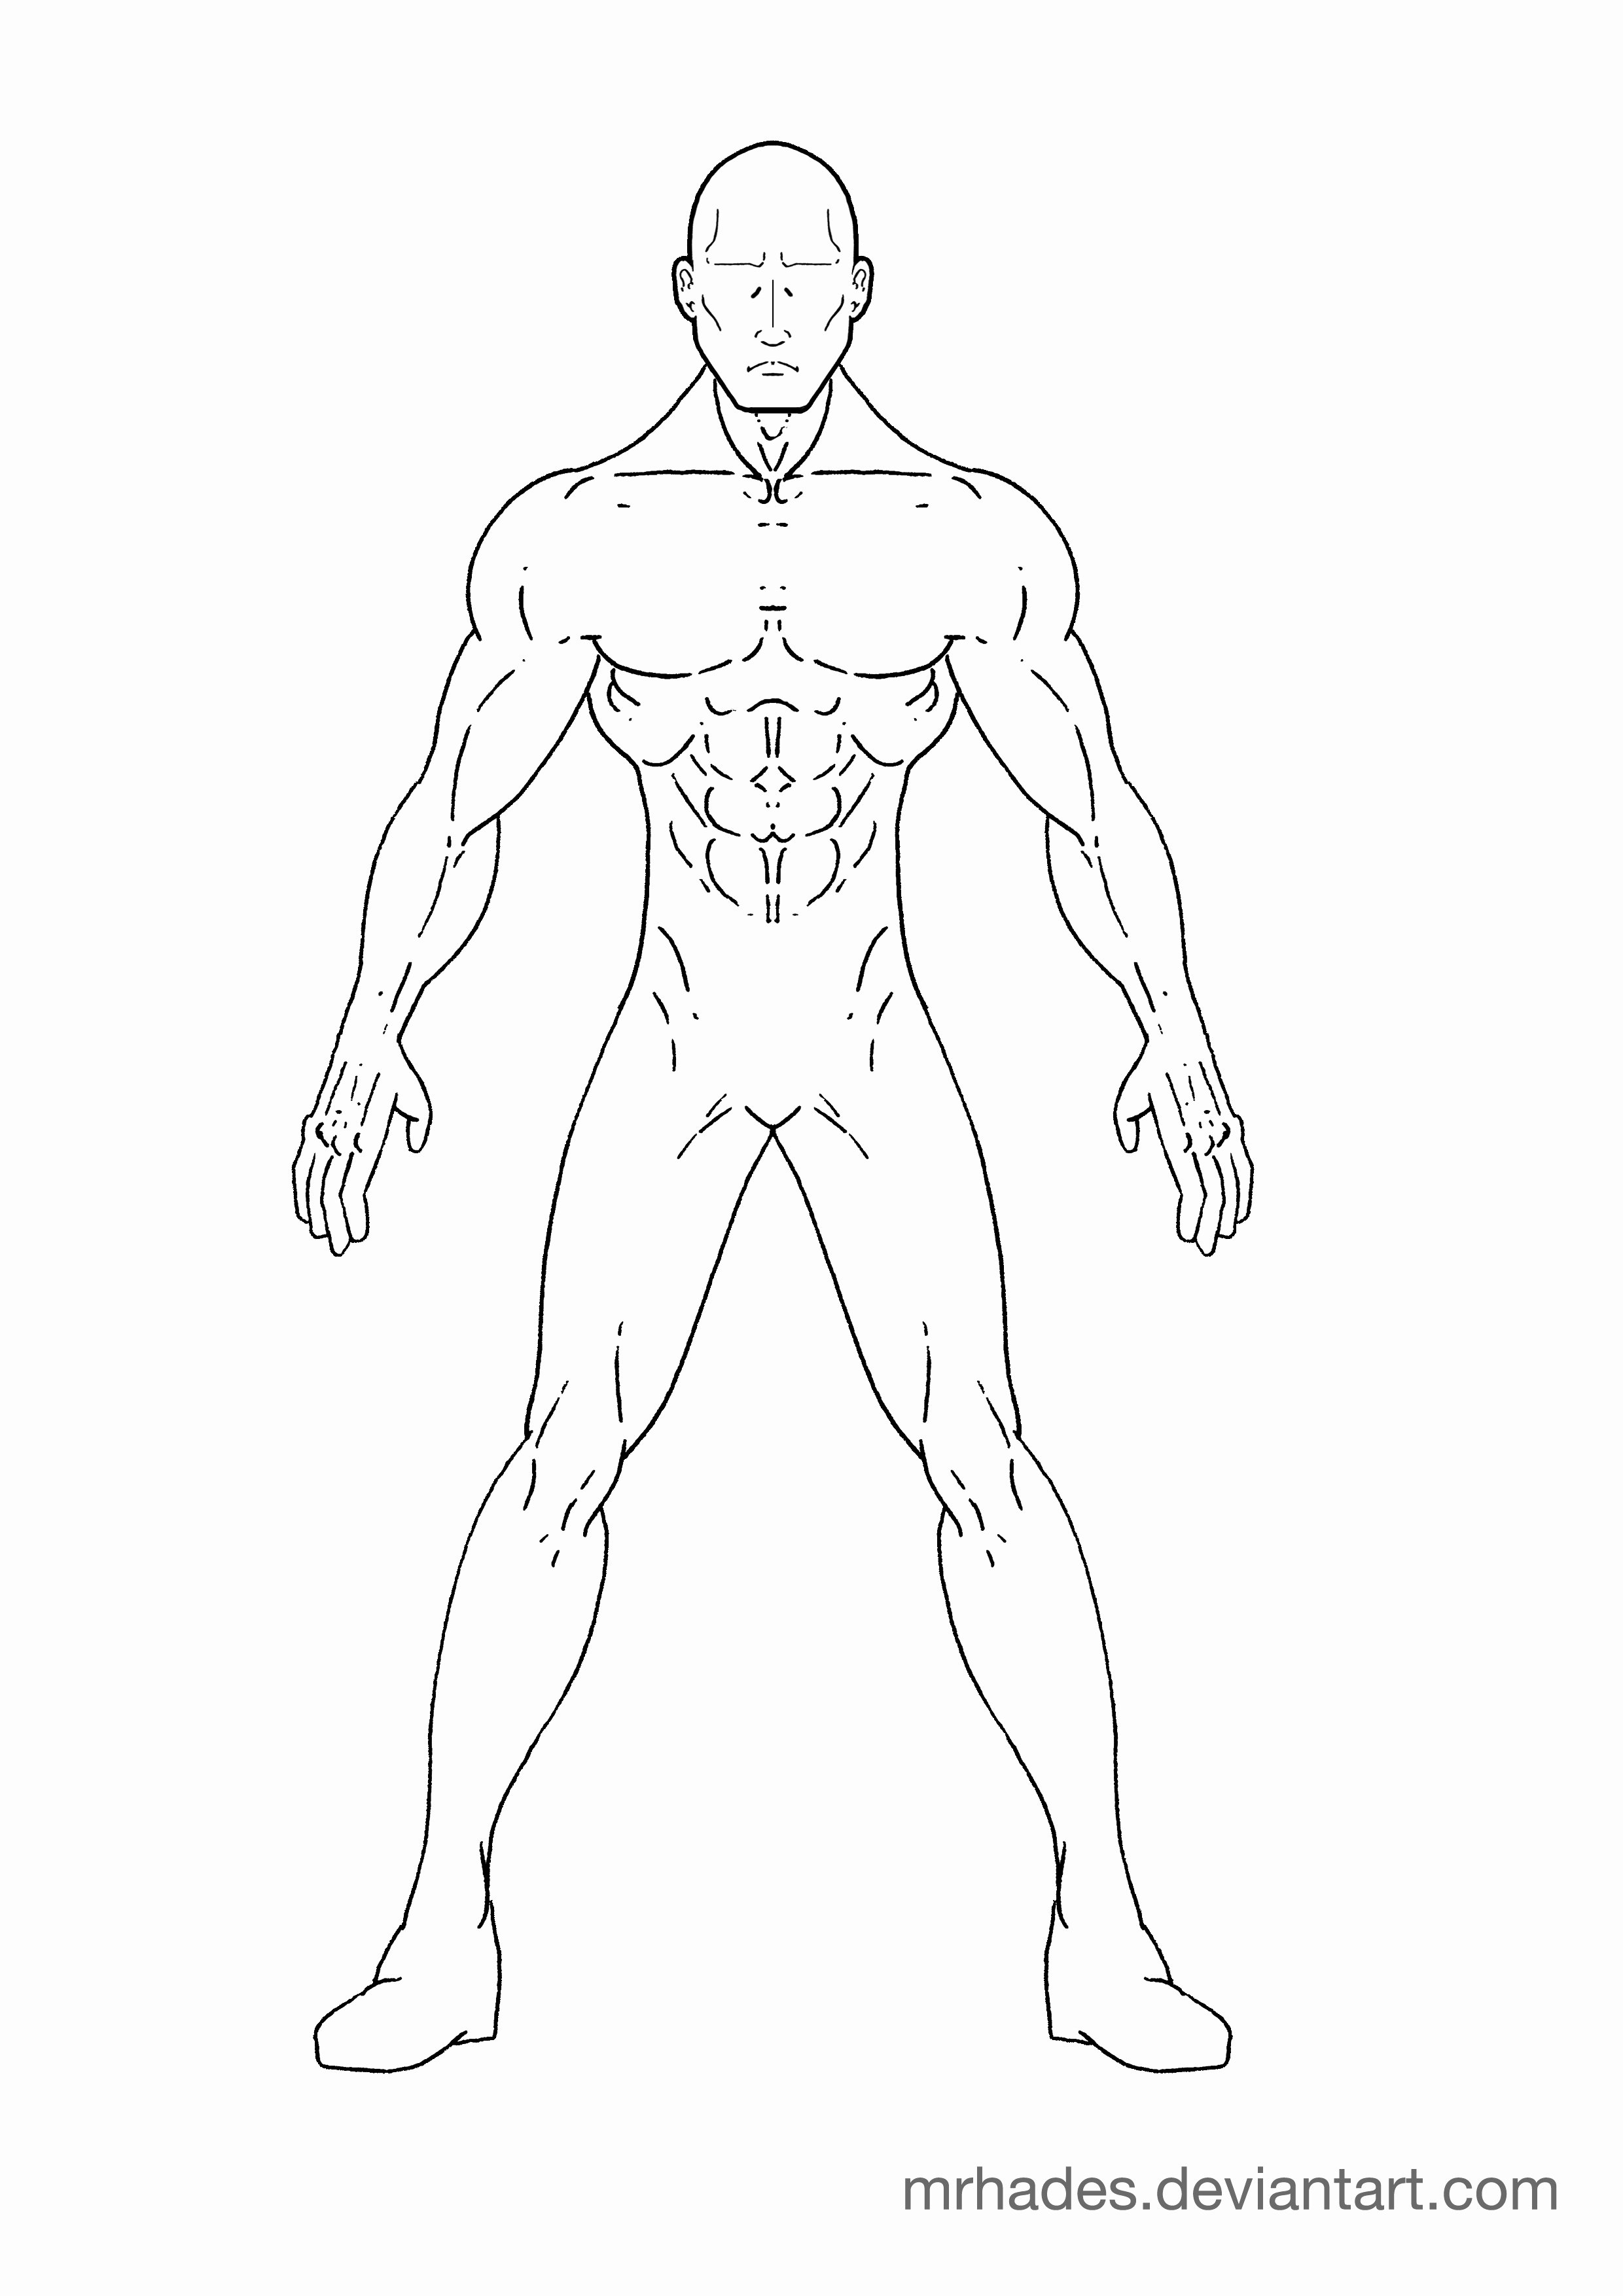 Blank Male Body Template Inspirational Superhero Drawing Templates Drawings Art Gallery